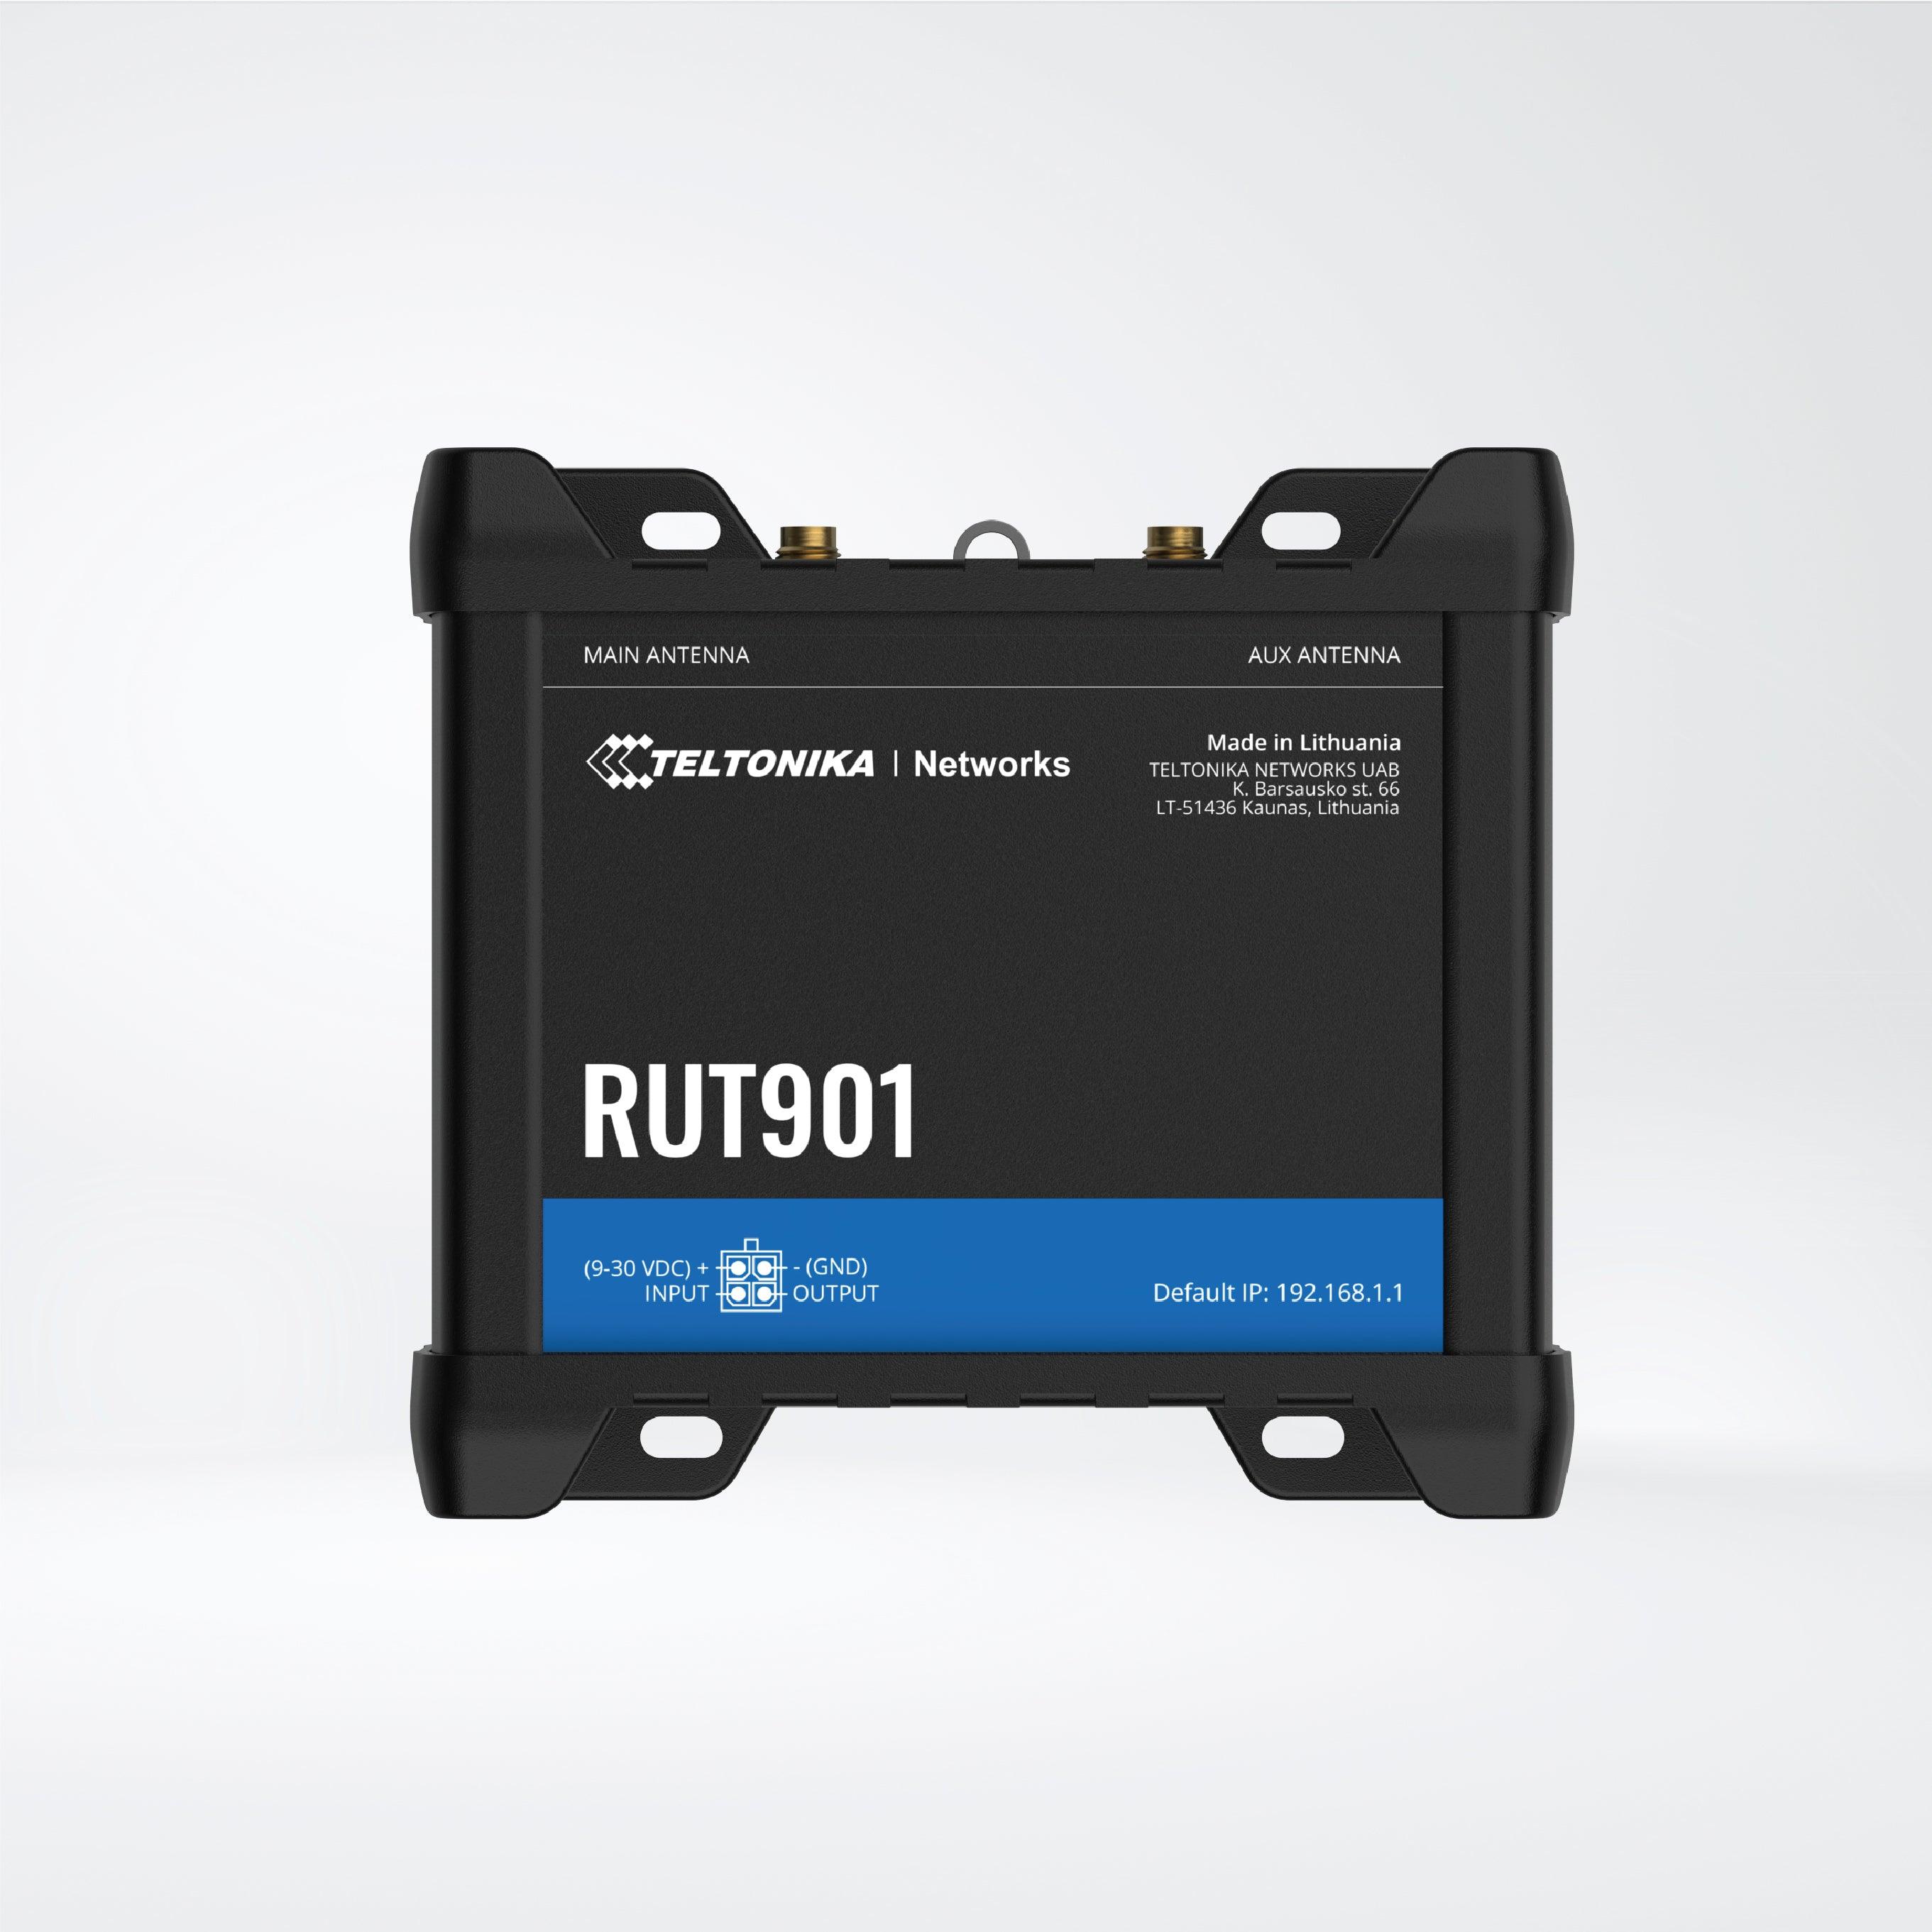 RUT901 Industrial 4G Router Wi-Fi/Dual-SIM - Riverplus